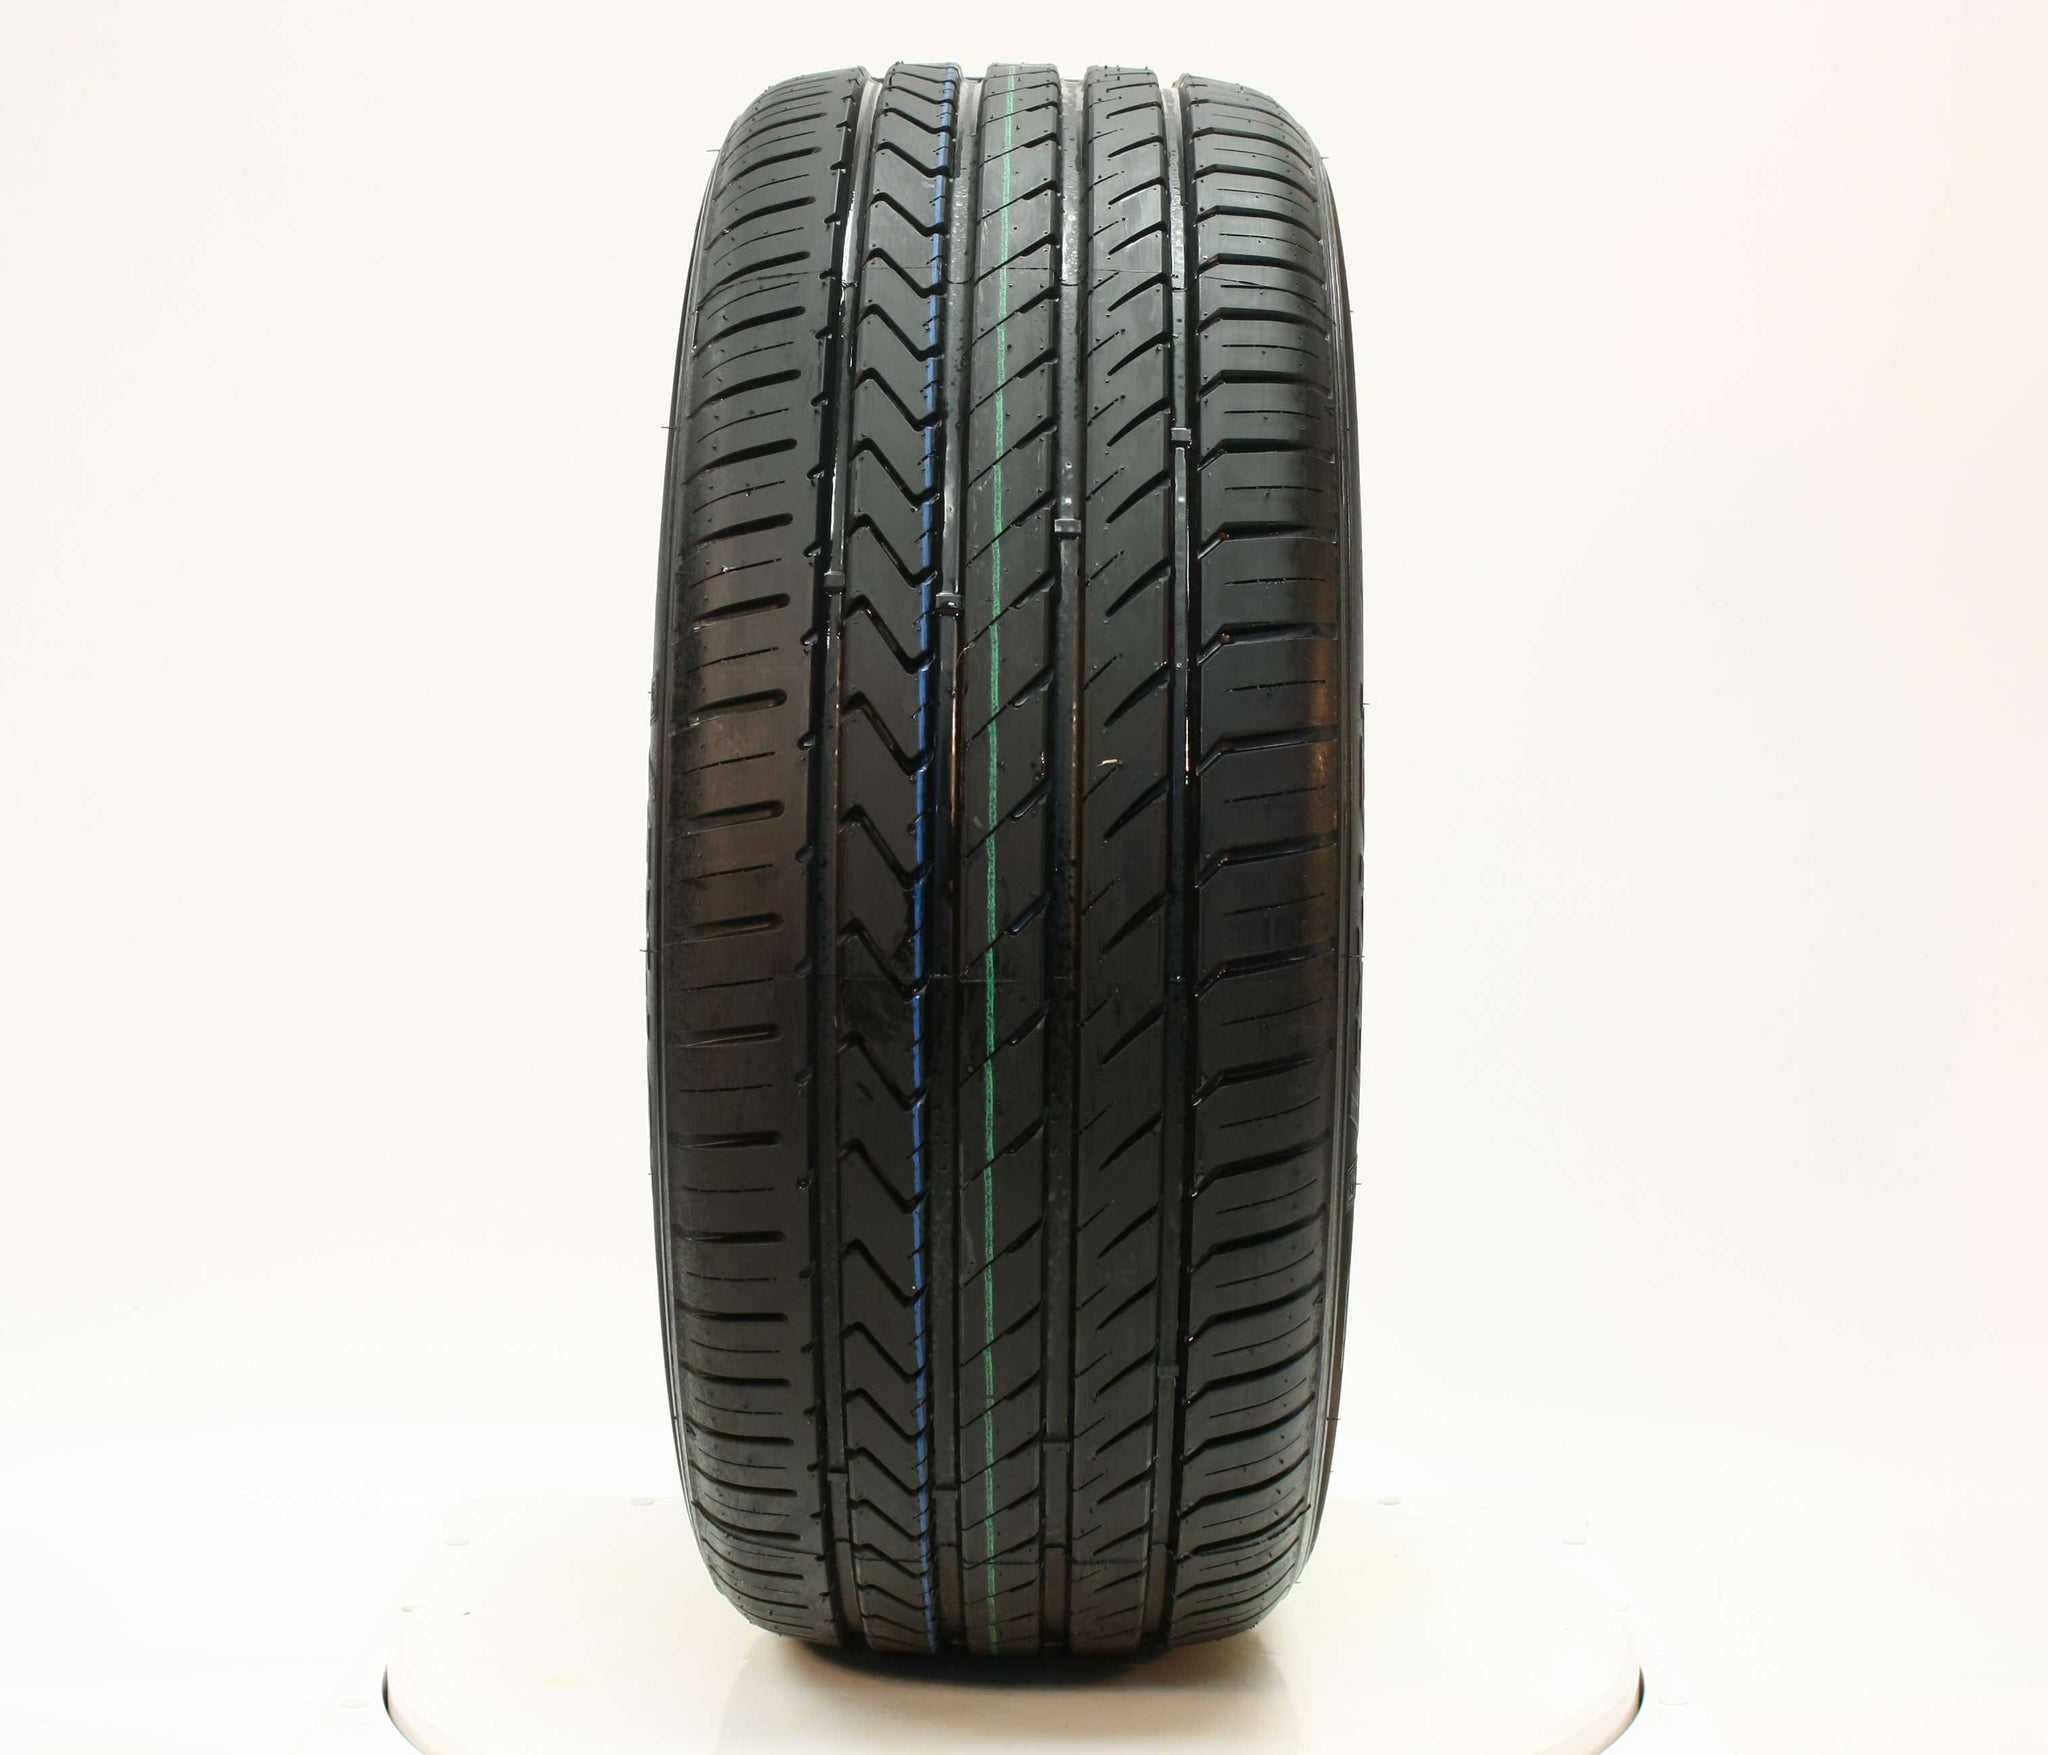 LEXANI LX-TWENTY 305/25ZR20 (26X12.3R 20) Tires